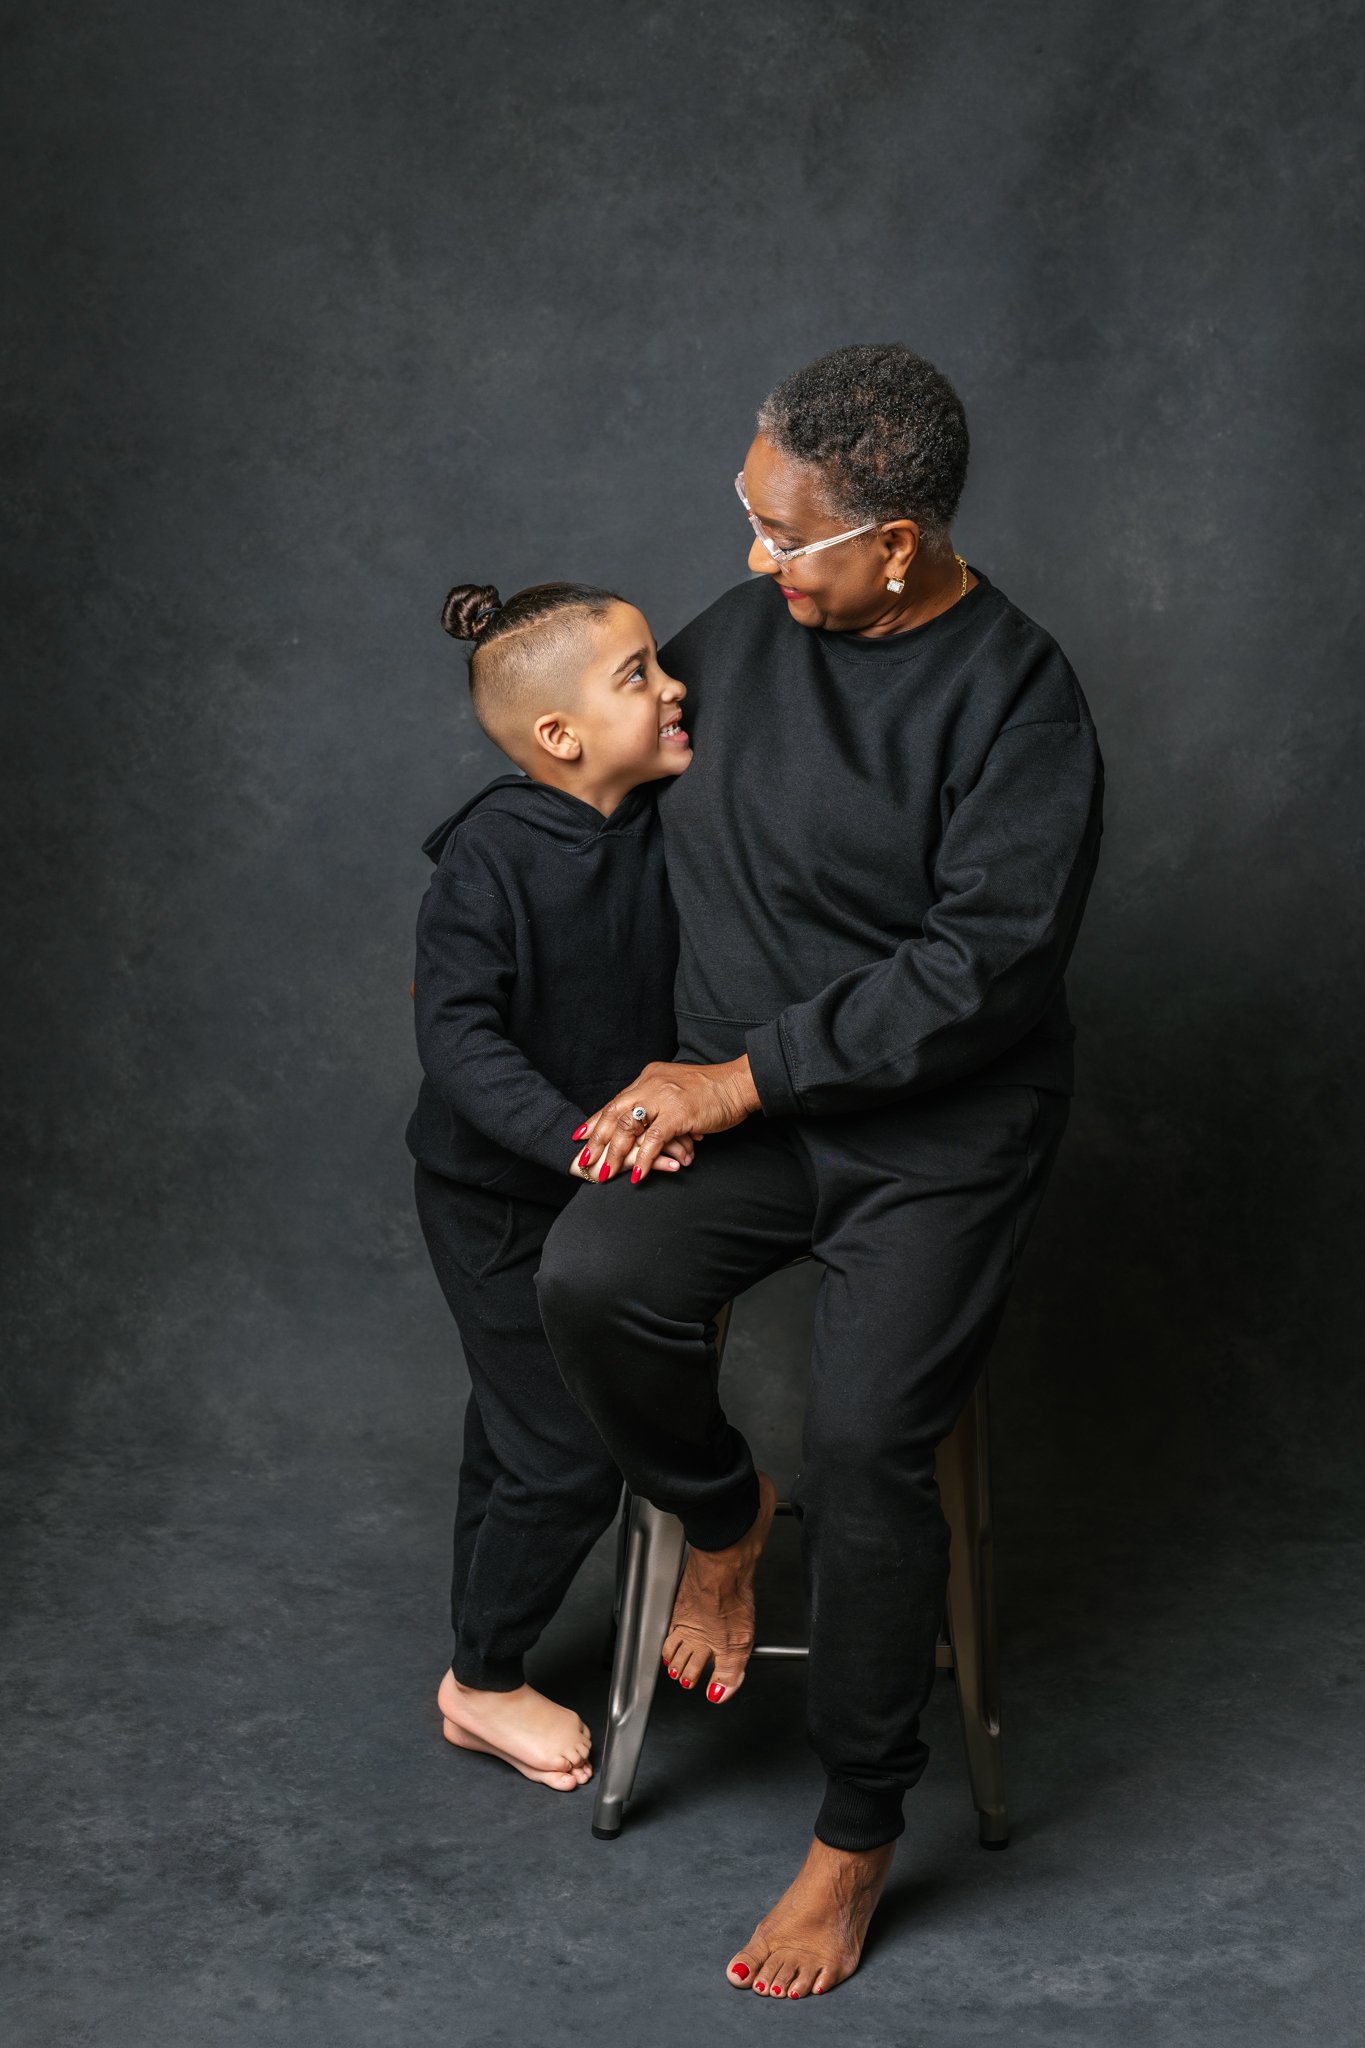  Nicole Hawkins's PHotography captures a grandmother hugging her grandson during modern studio portraits. grandma #NicoleHawkinsPhotograaphy #NicoleHawkinsFamilies #Modernfamilypictures #studioportraits #matchingfamilyoutfits #NJphotographer 